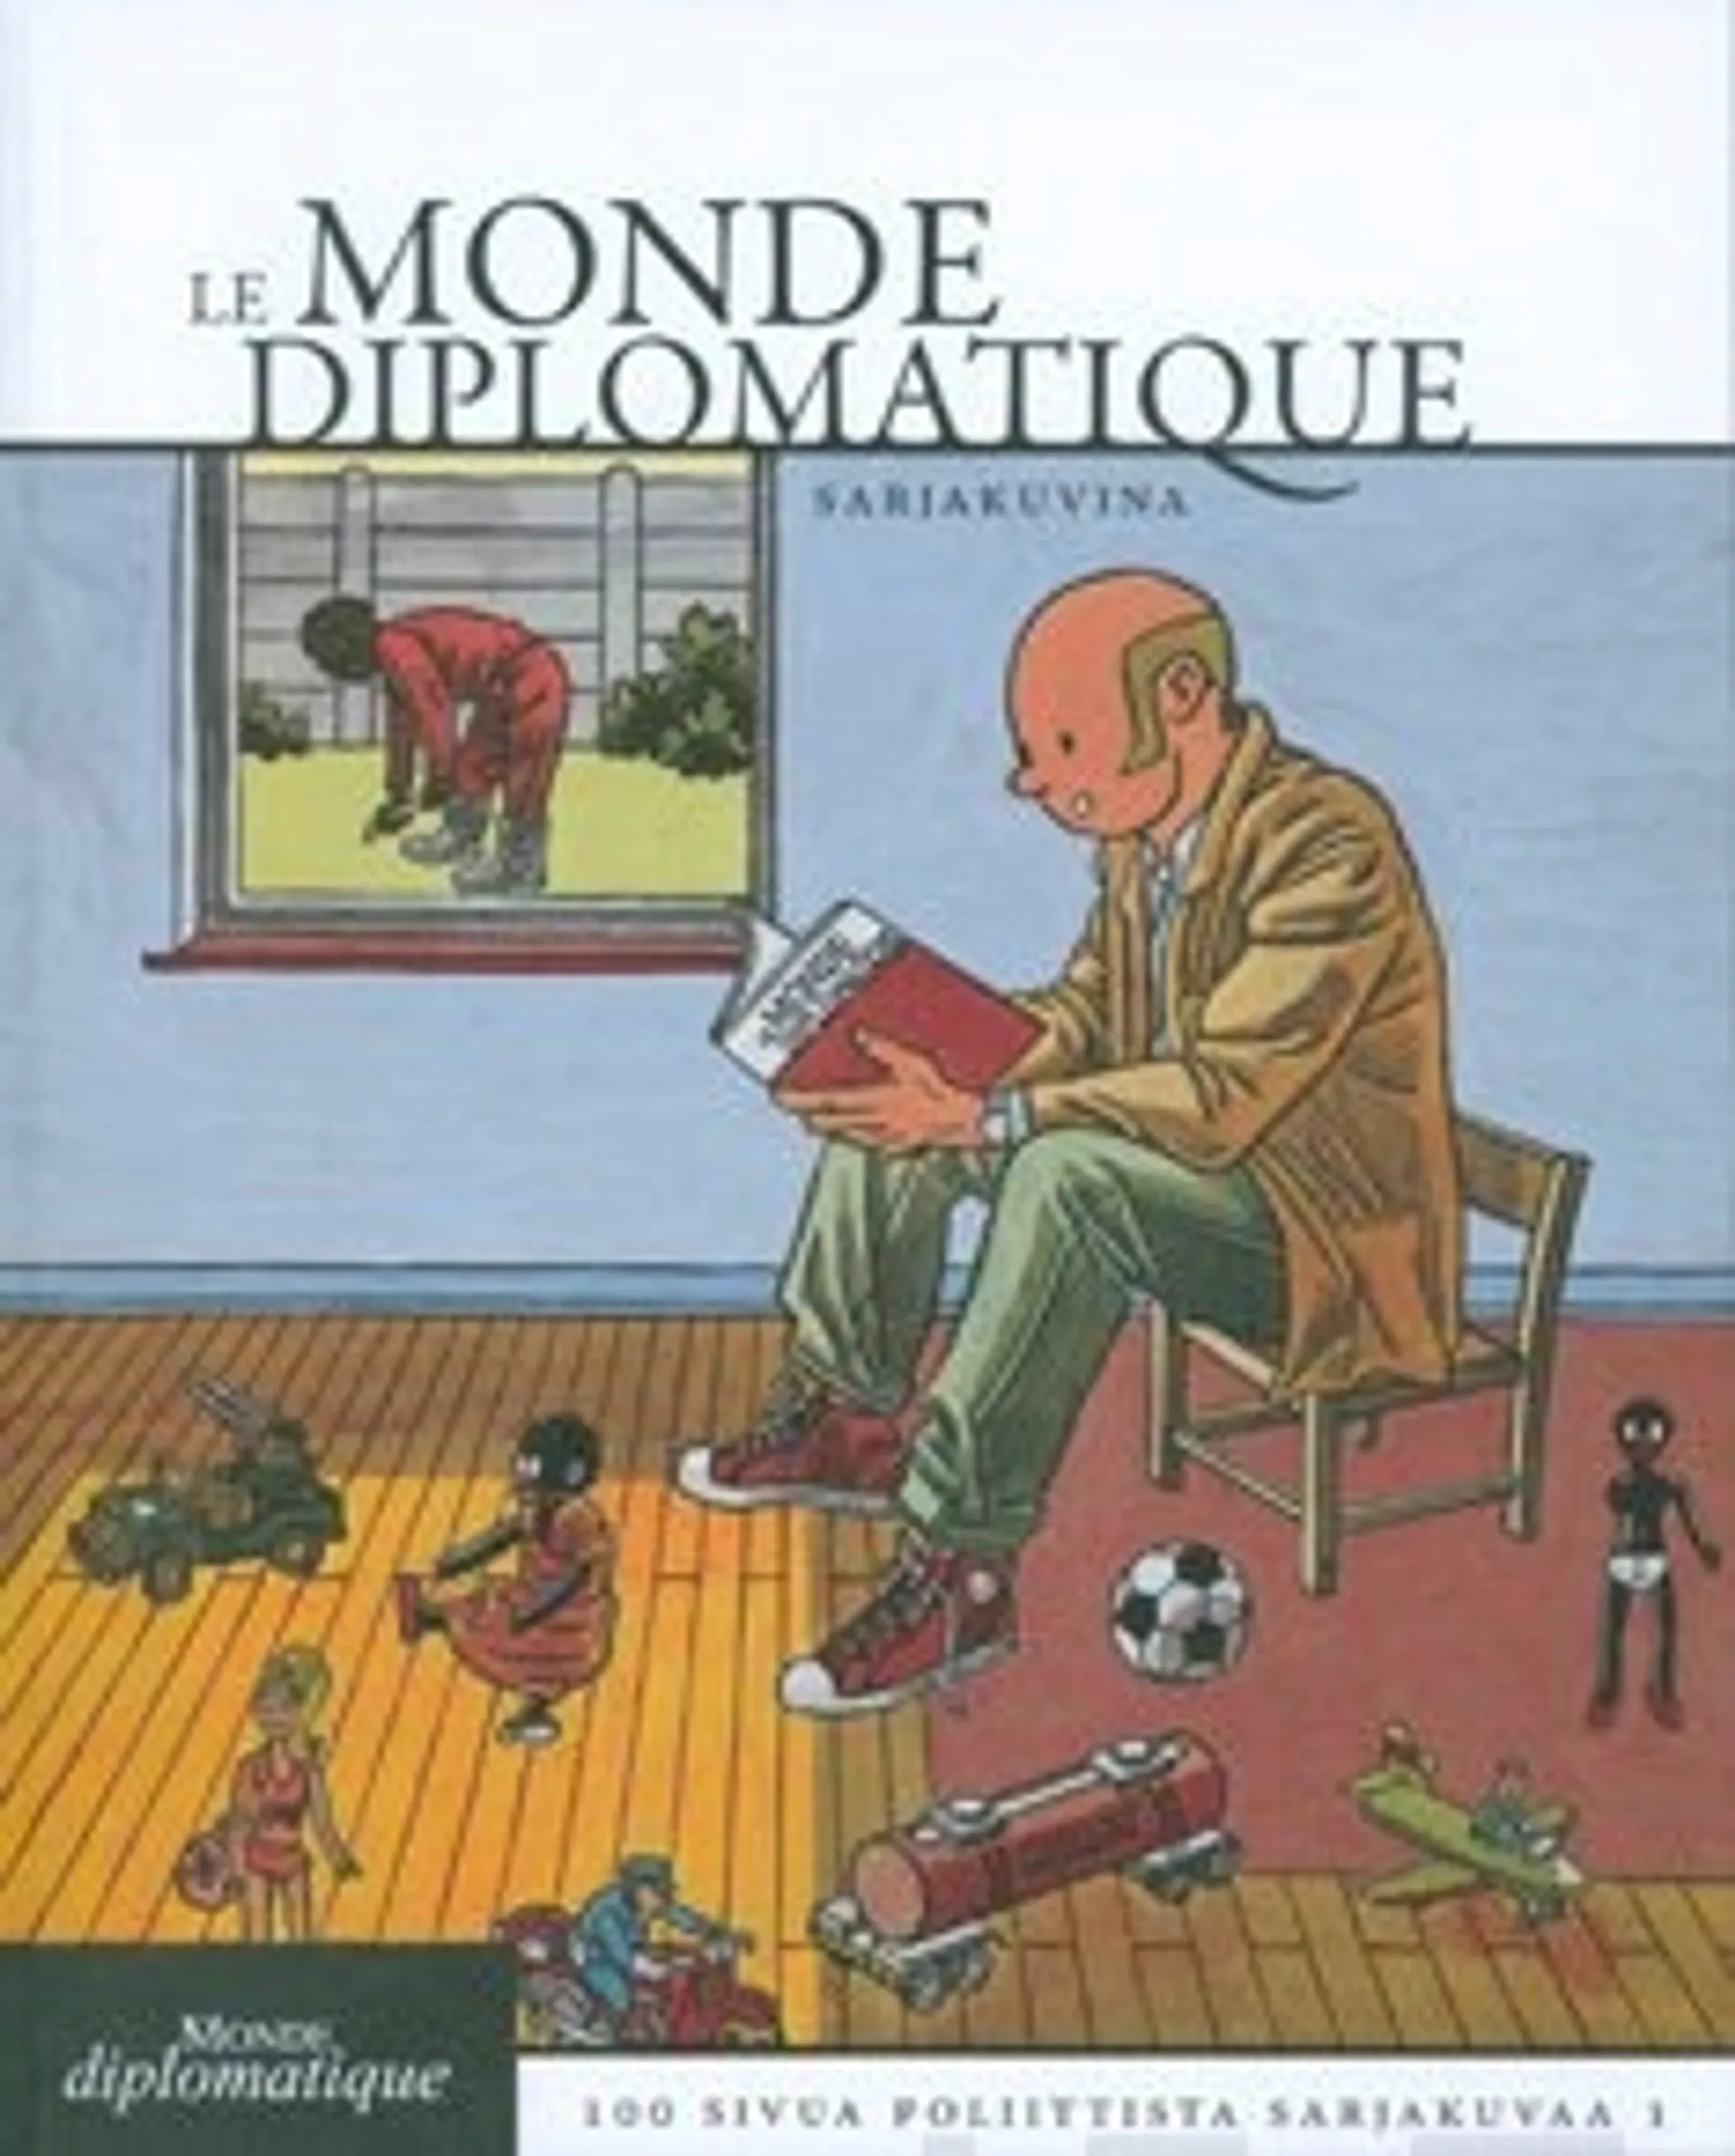 Le Monde Diplomatique sarjakuvina